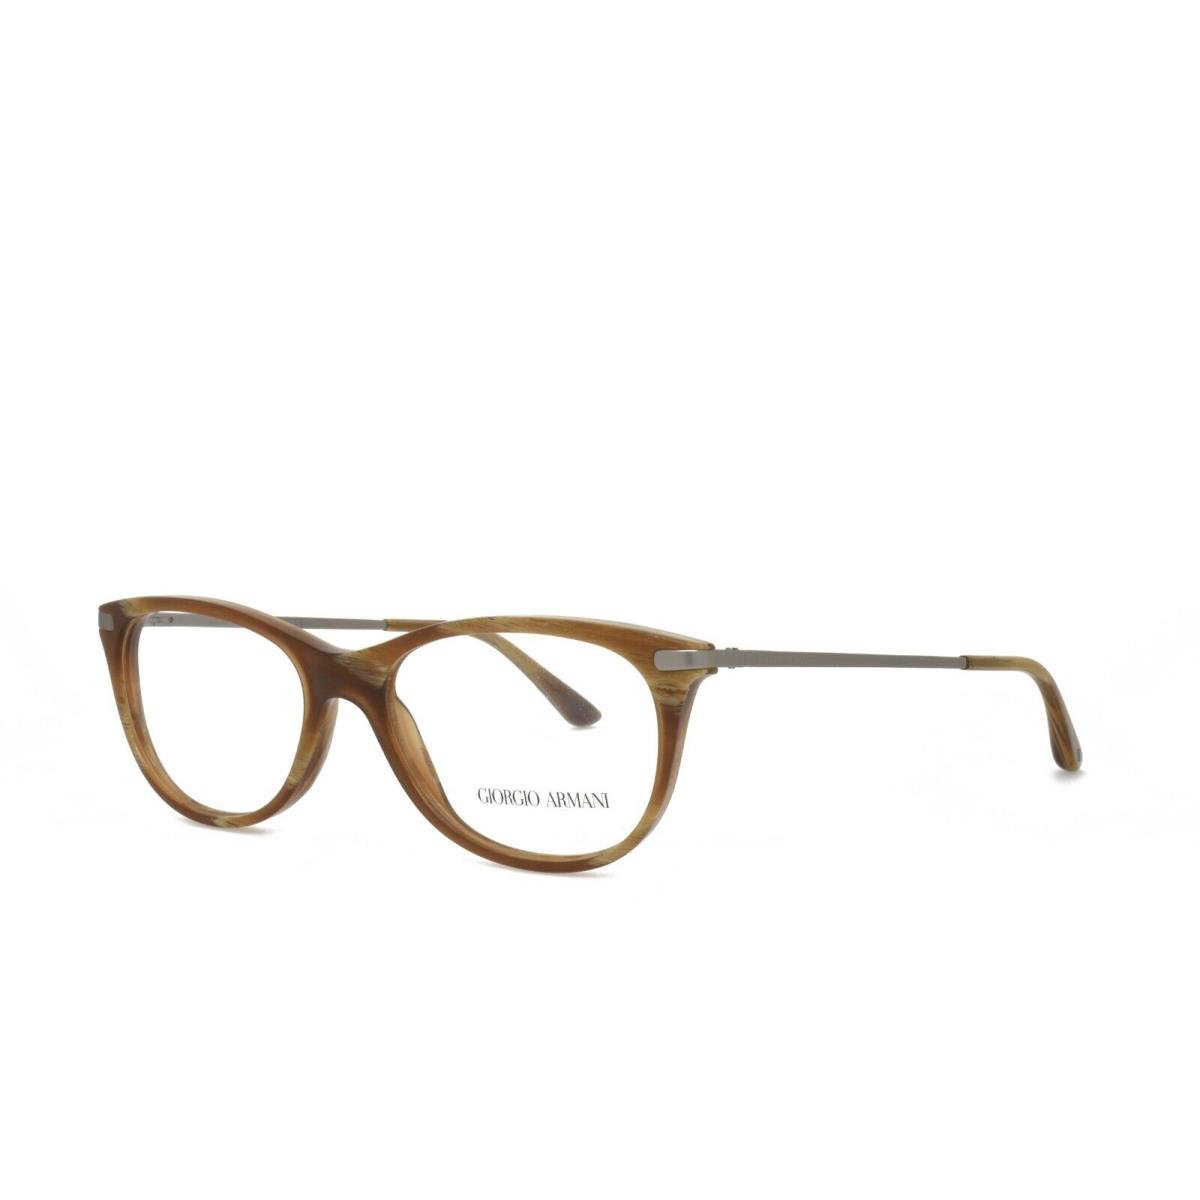 Giorgio Armani 7015 5134 51-16-140 Brown Eyeglasses Frames